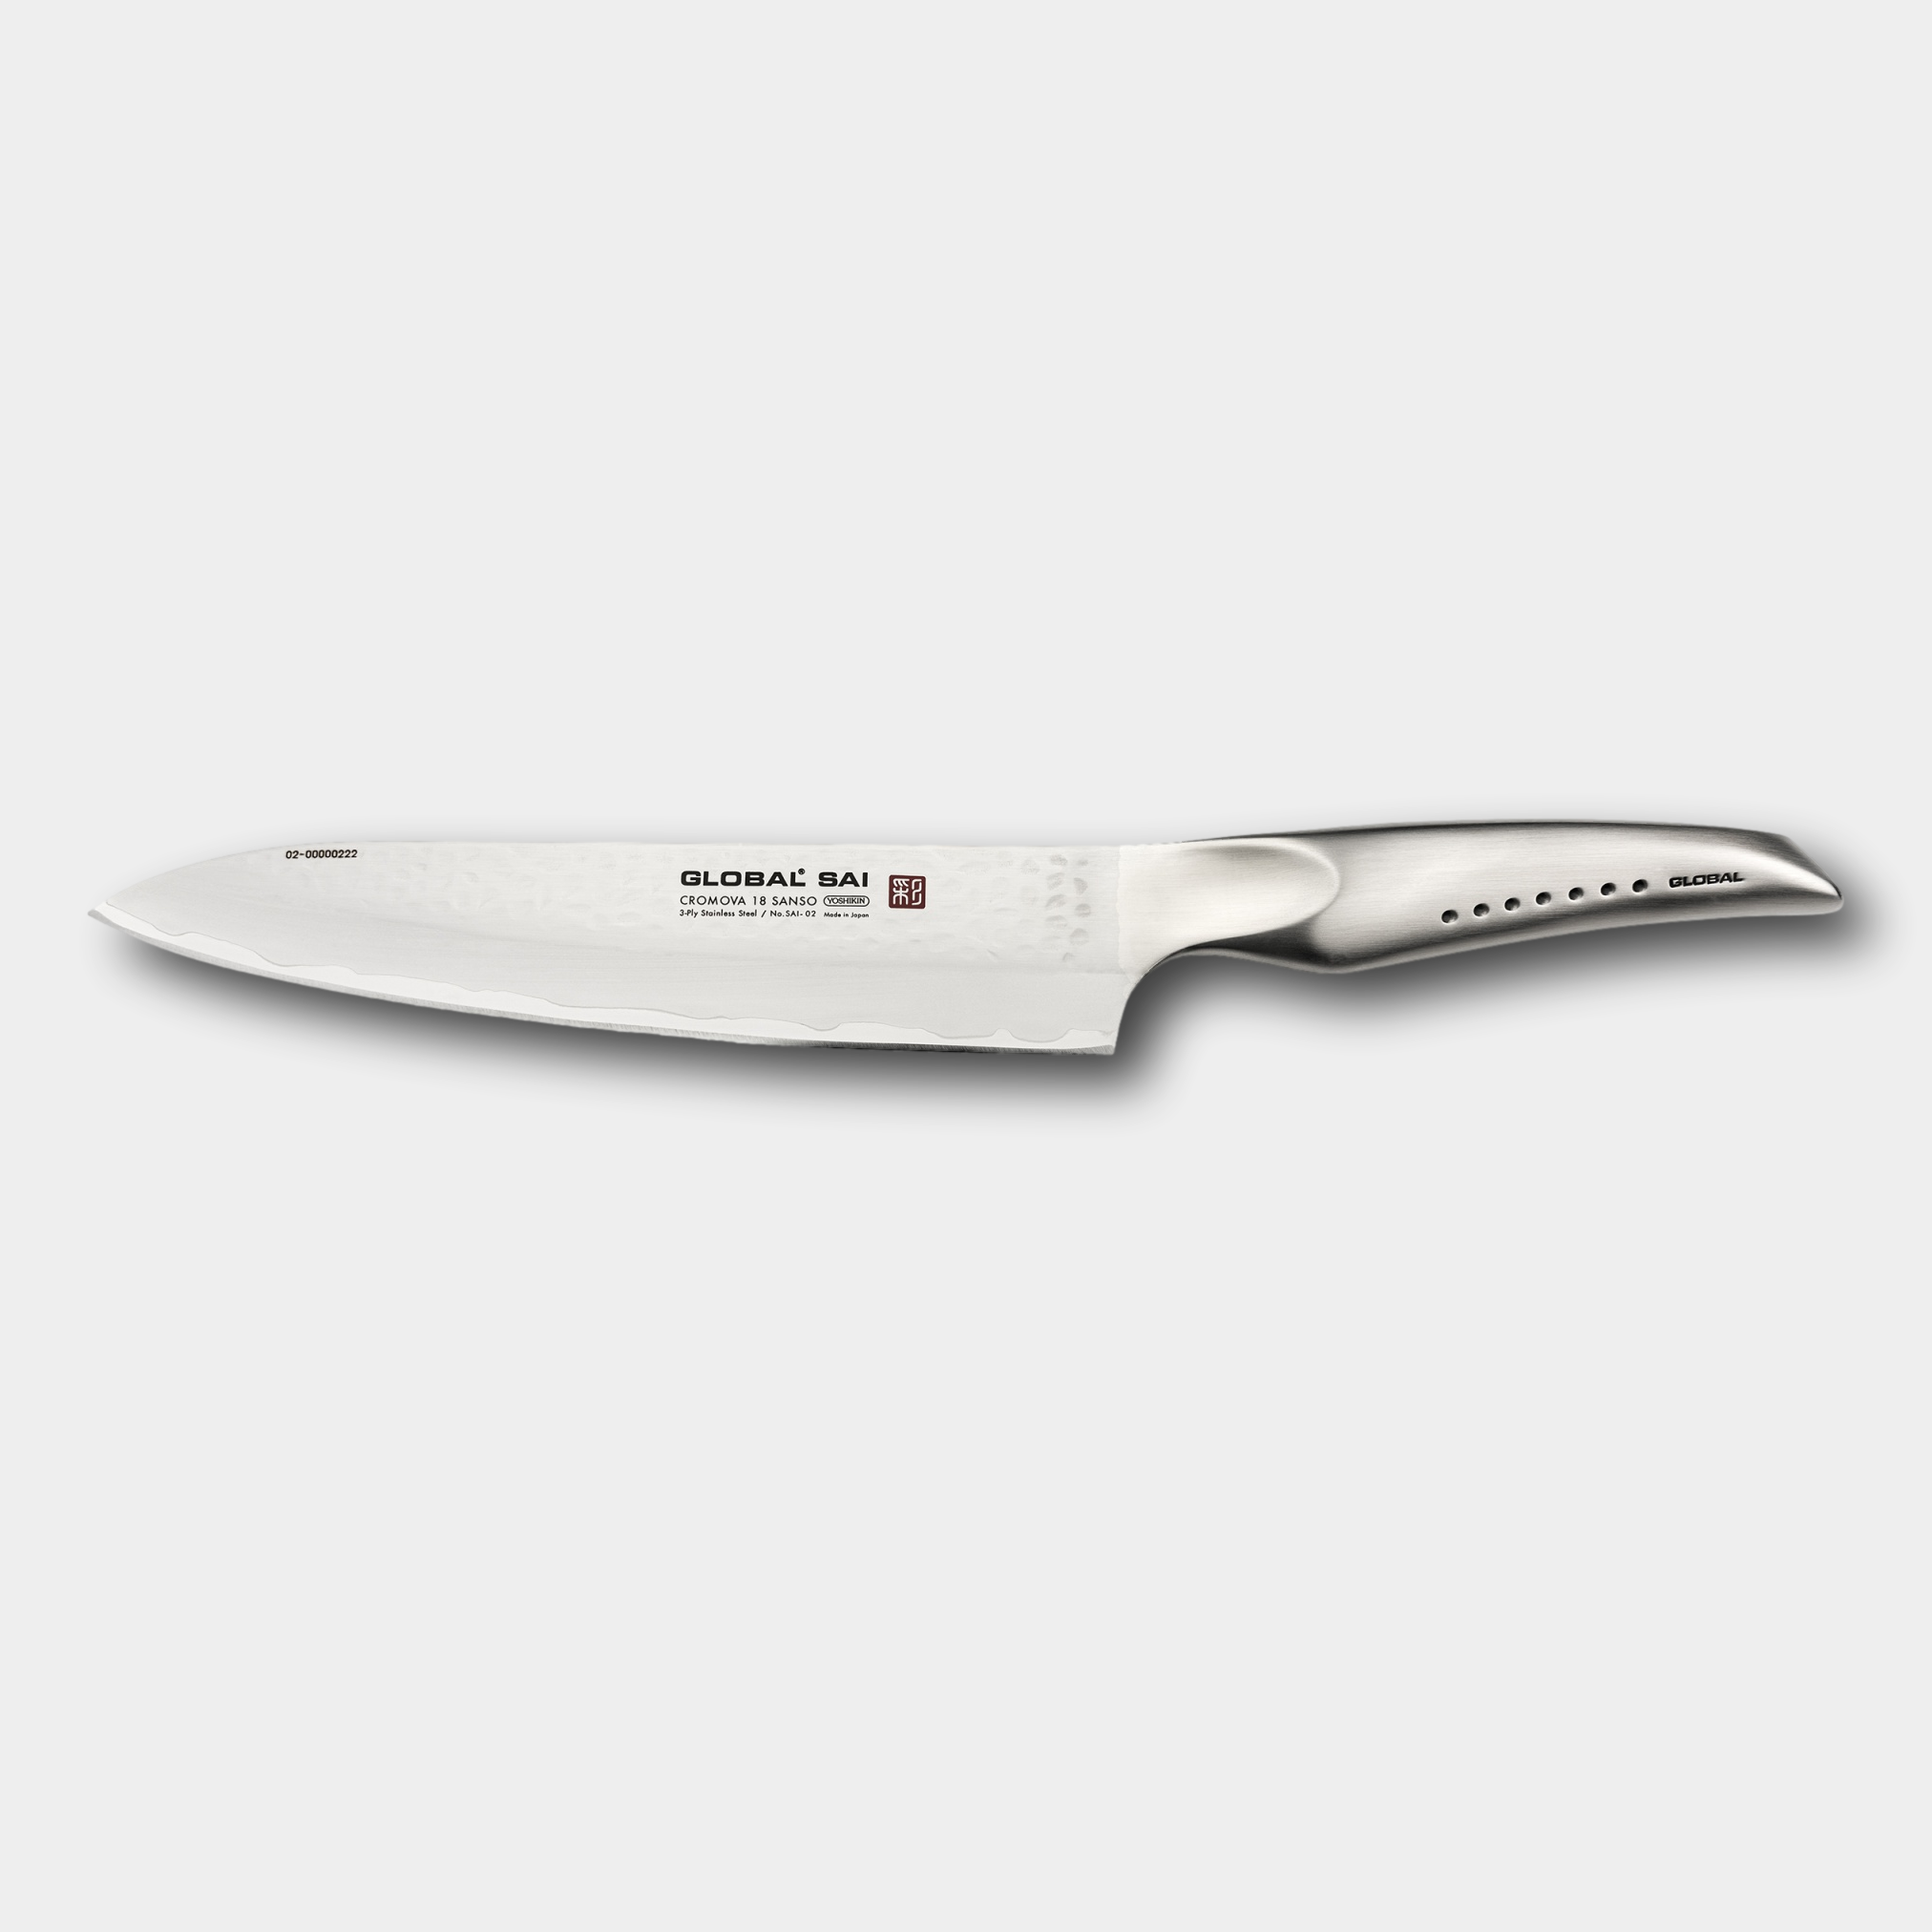 Global Sai Carving Knife 21cm